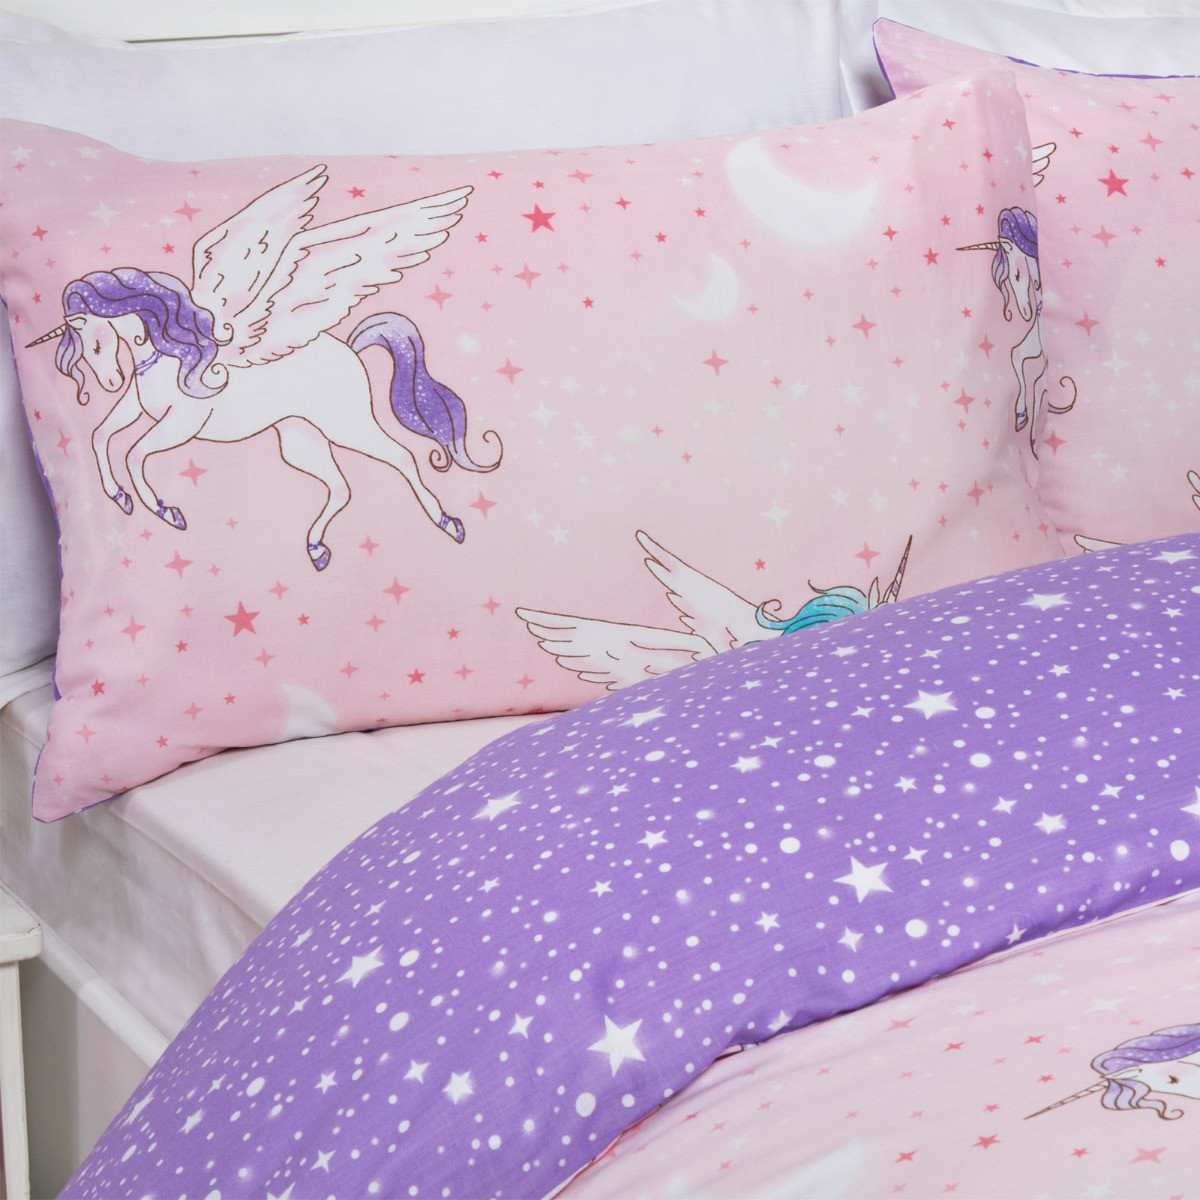 Dreamscene Sparkle Unicorn Duvet Set, Blush Pink - Double>